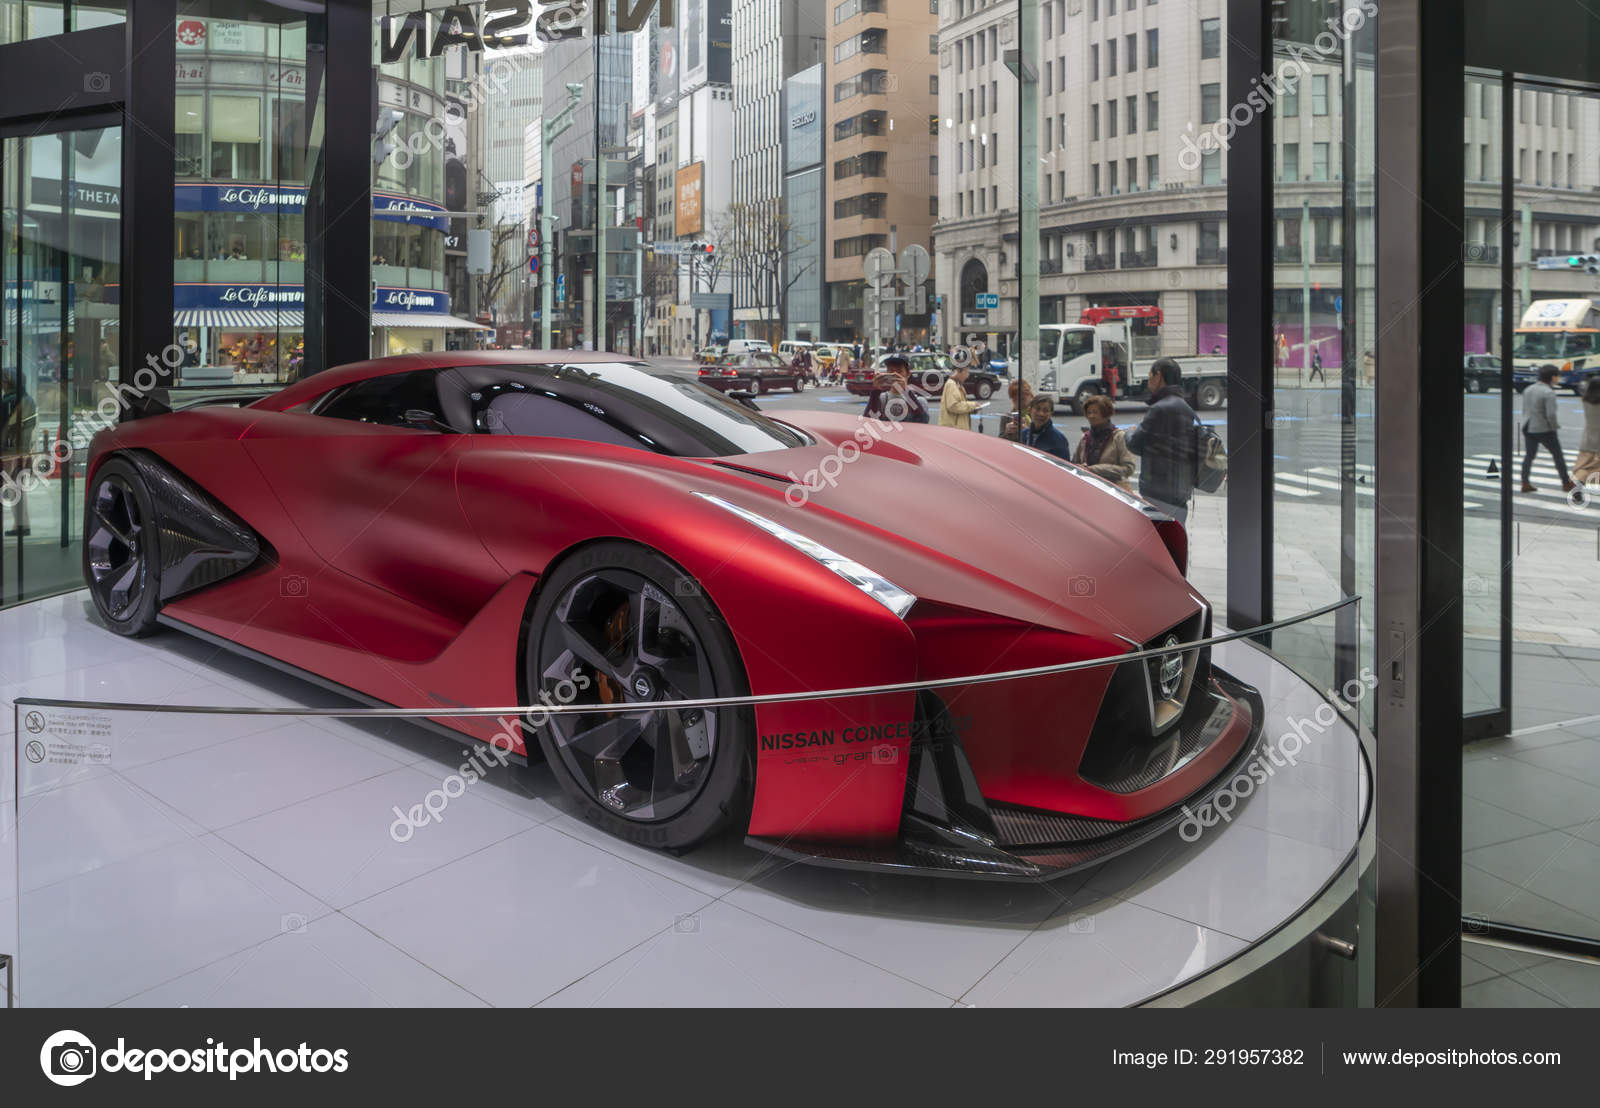 Nissan Concept Vision Gran Turismo Car Stock Editorial Photo C Ymgerman